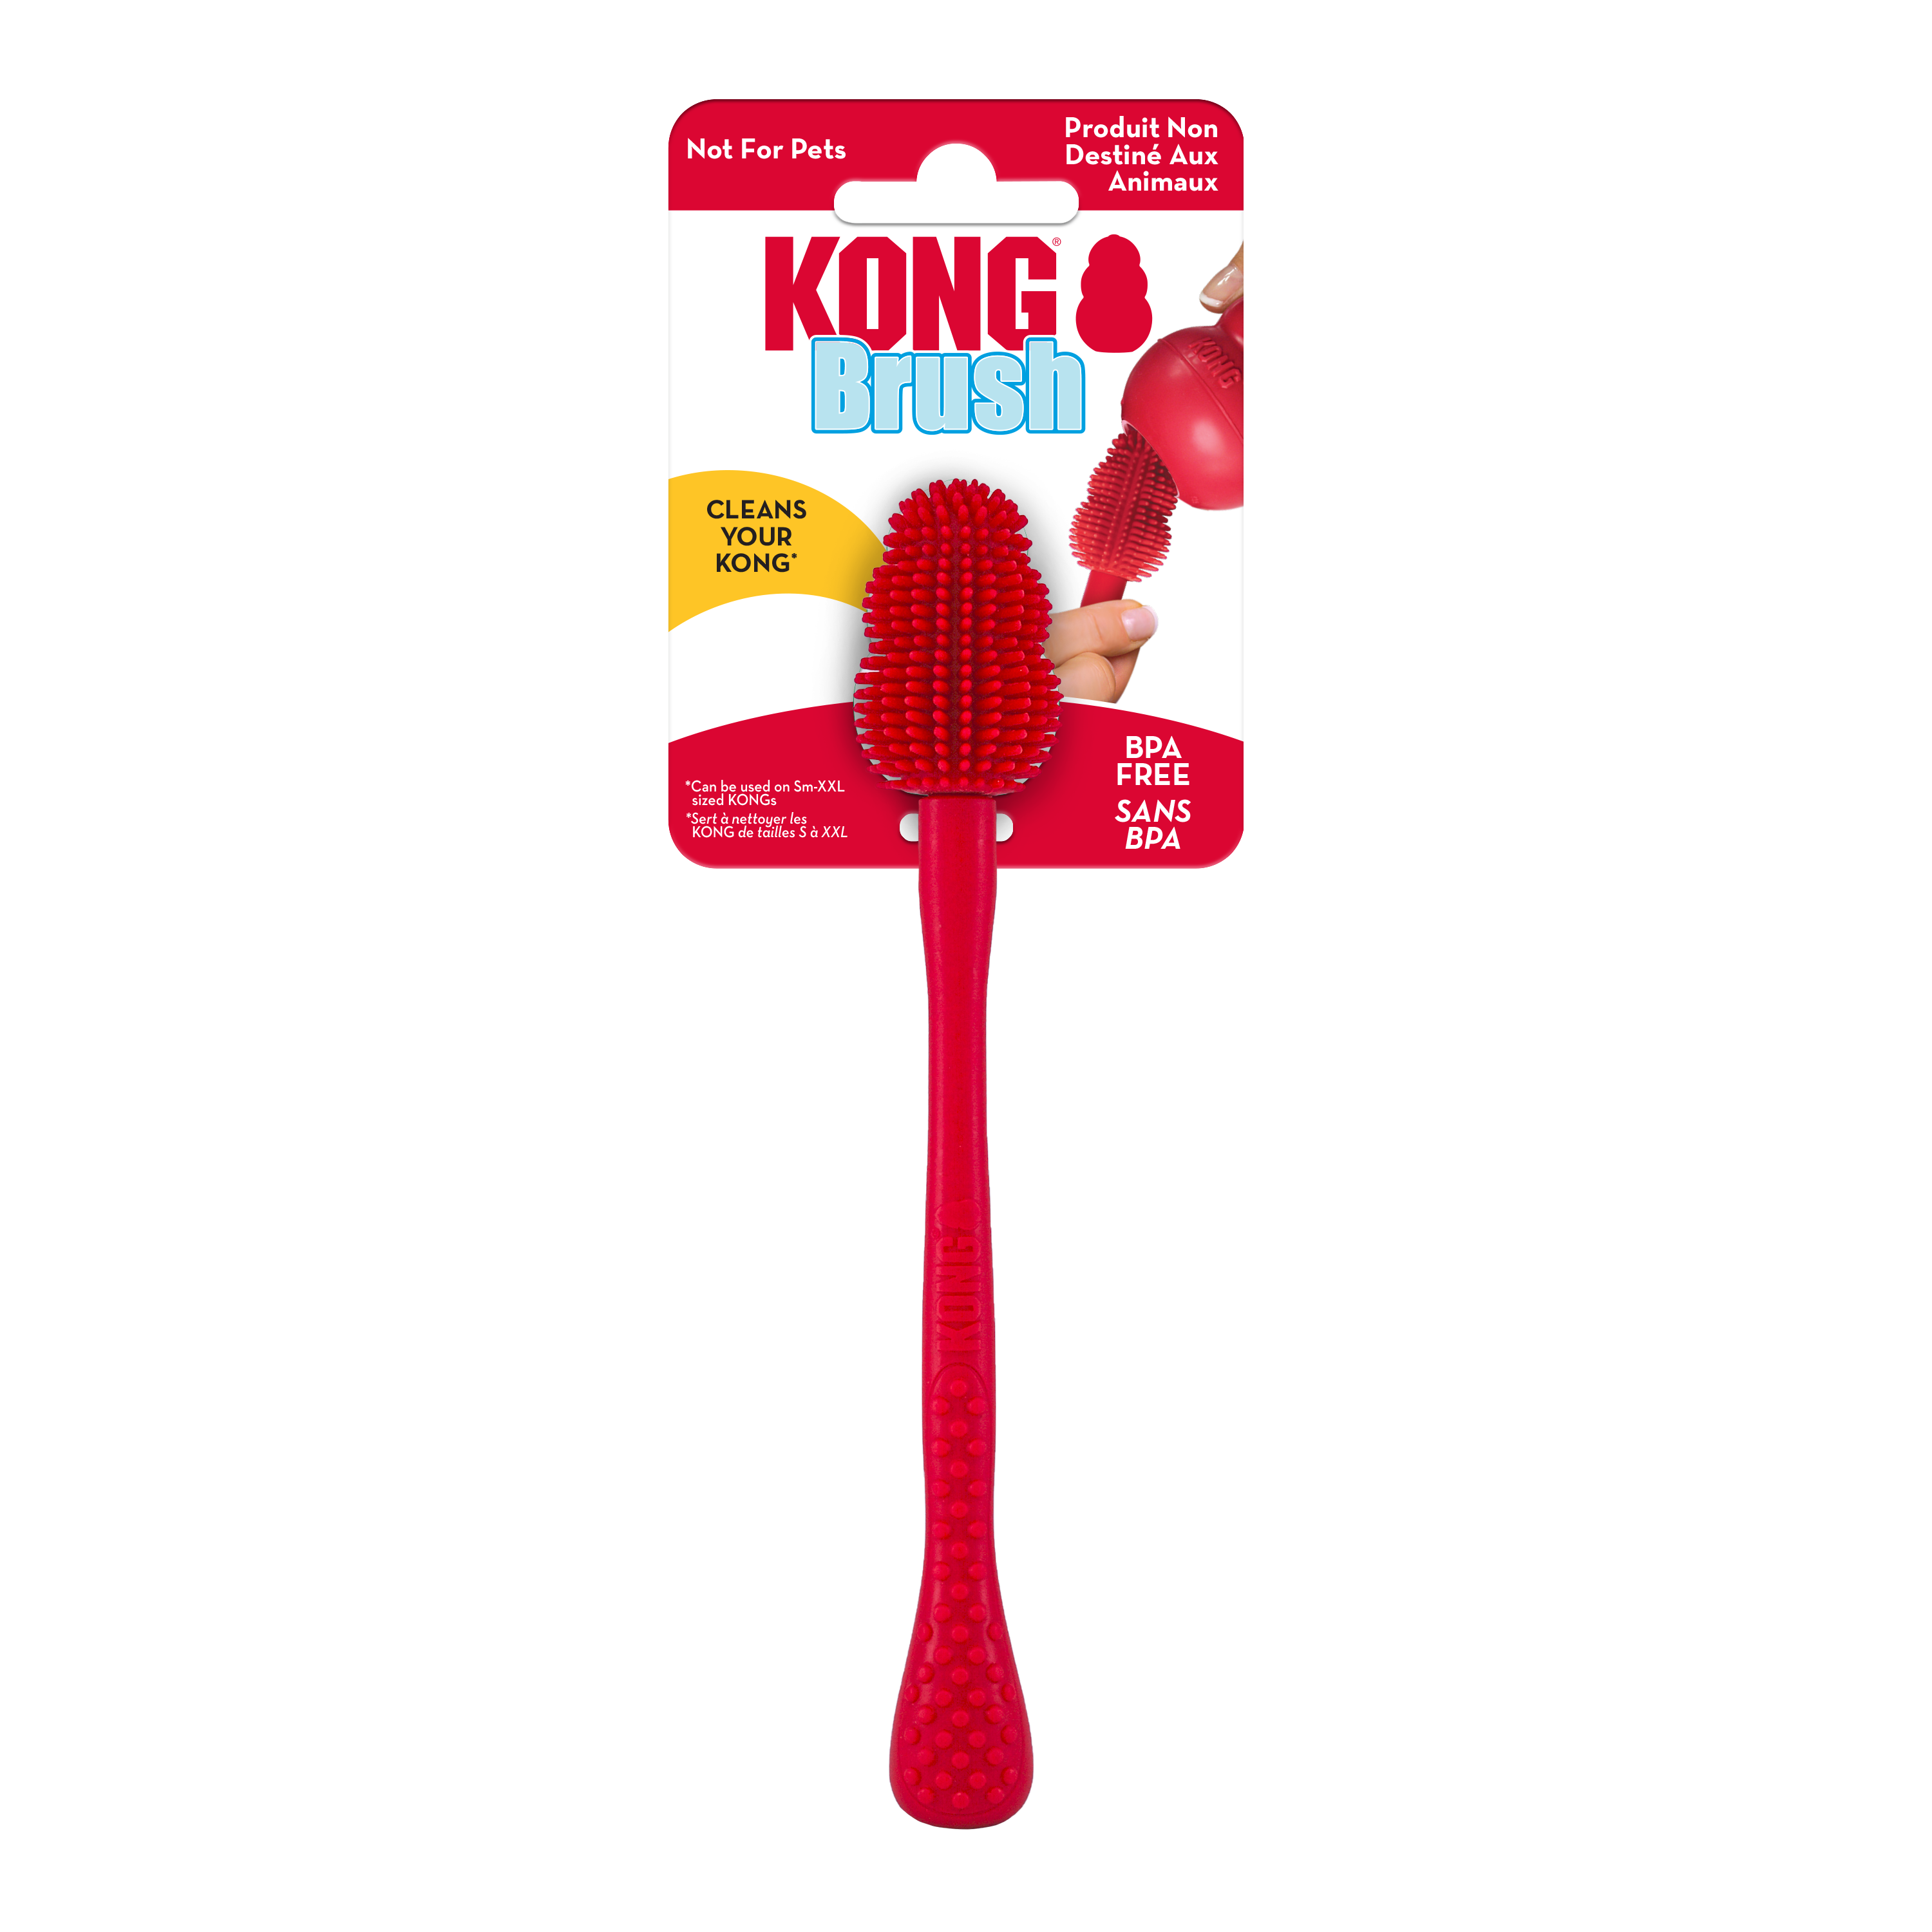 KONG Cleaning Brush onpack product image